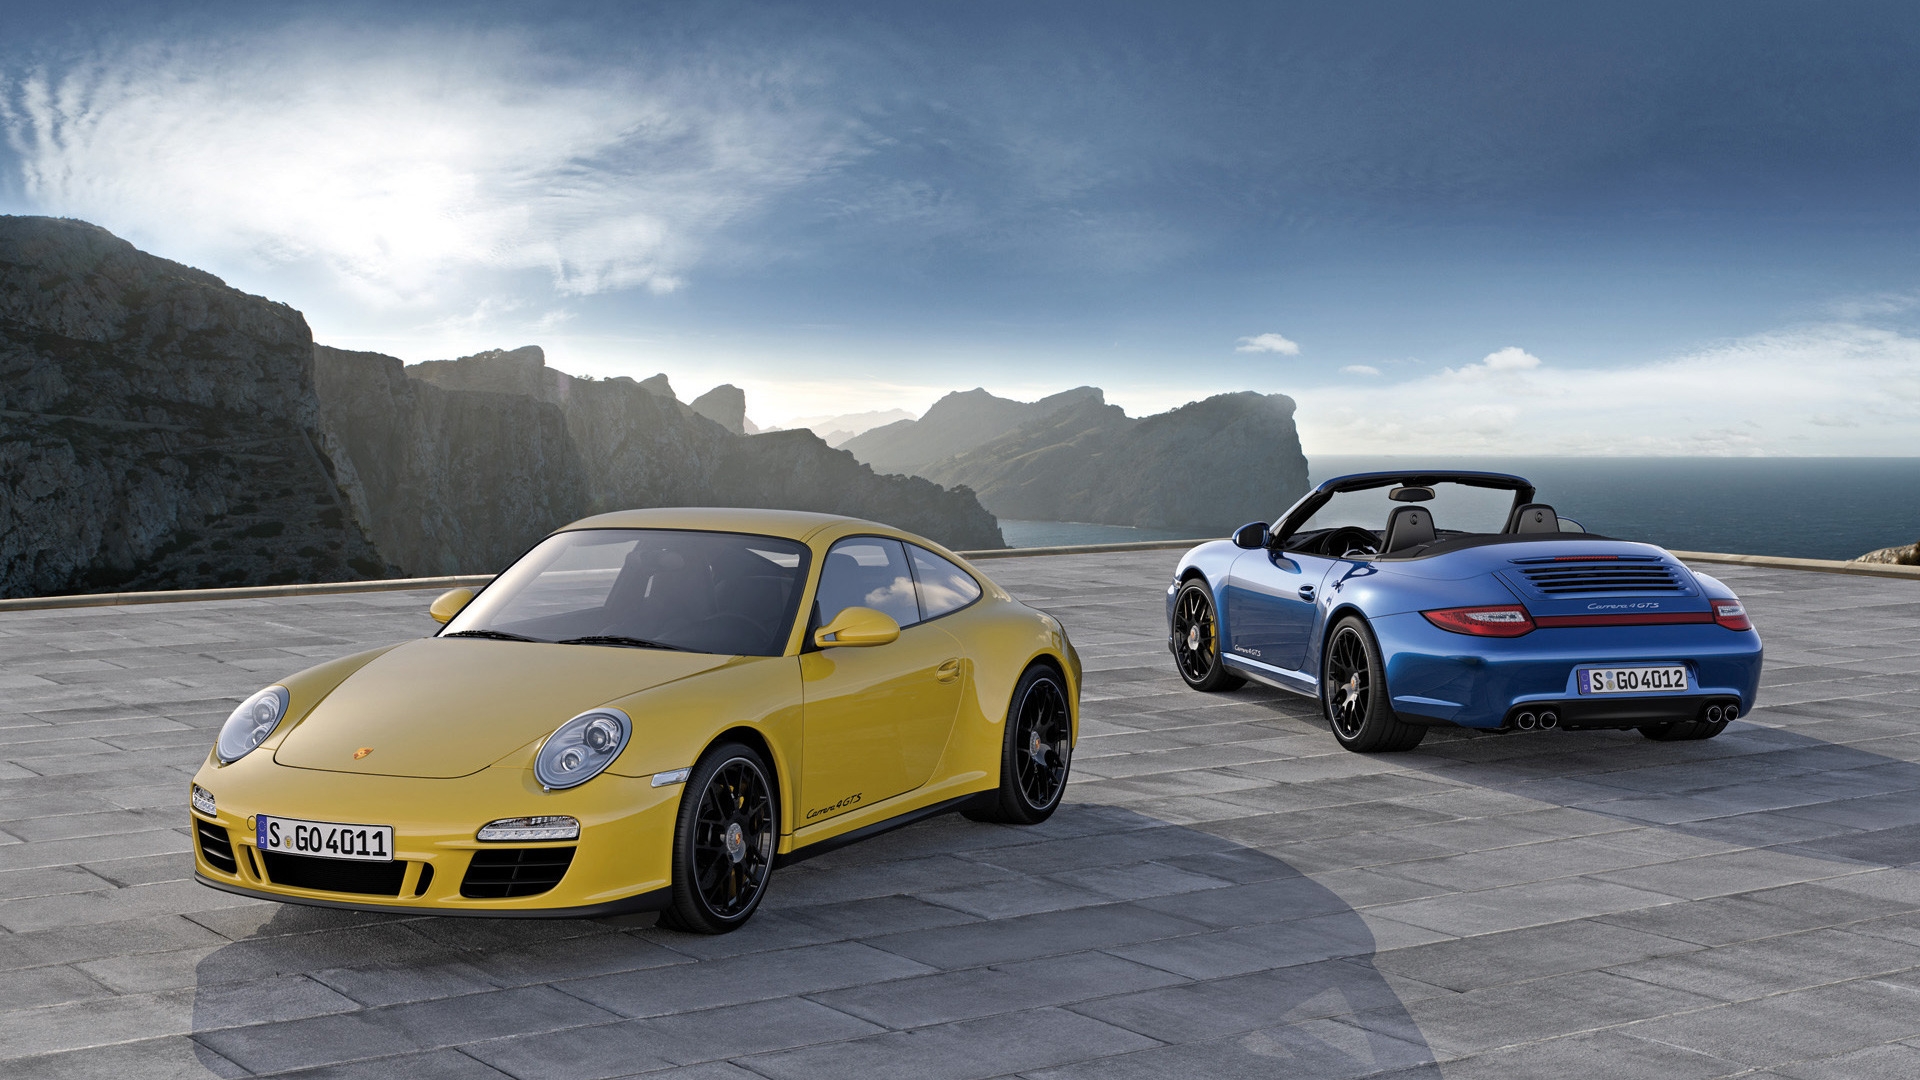 Porsche 911 Carrera 4 GTS Duo for 1920 x 1080 HDTV 1080p resolution